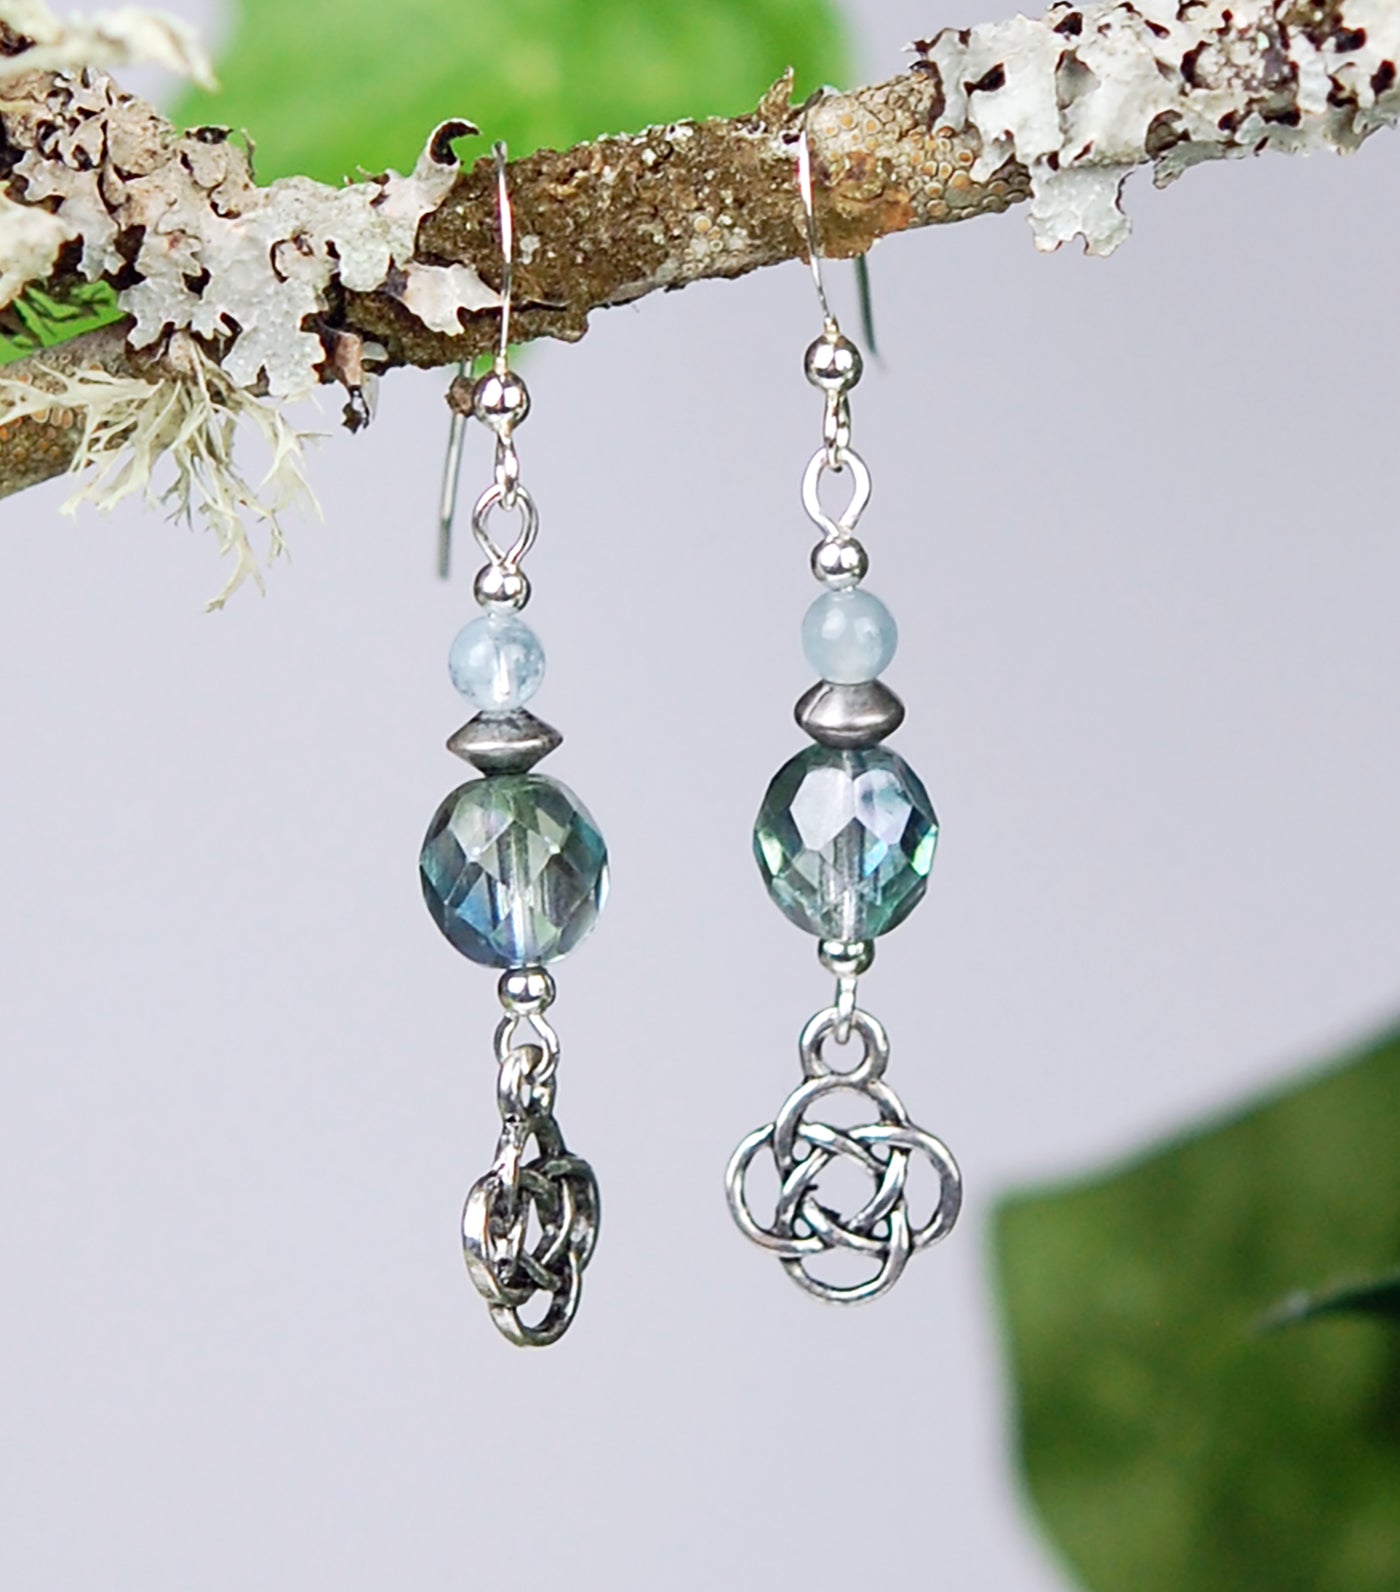 Aquamarine with Glass Beads and Round Knot